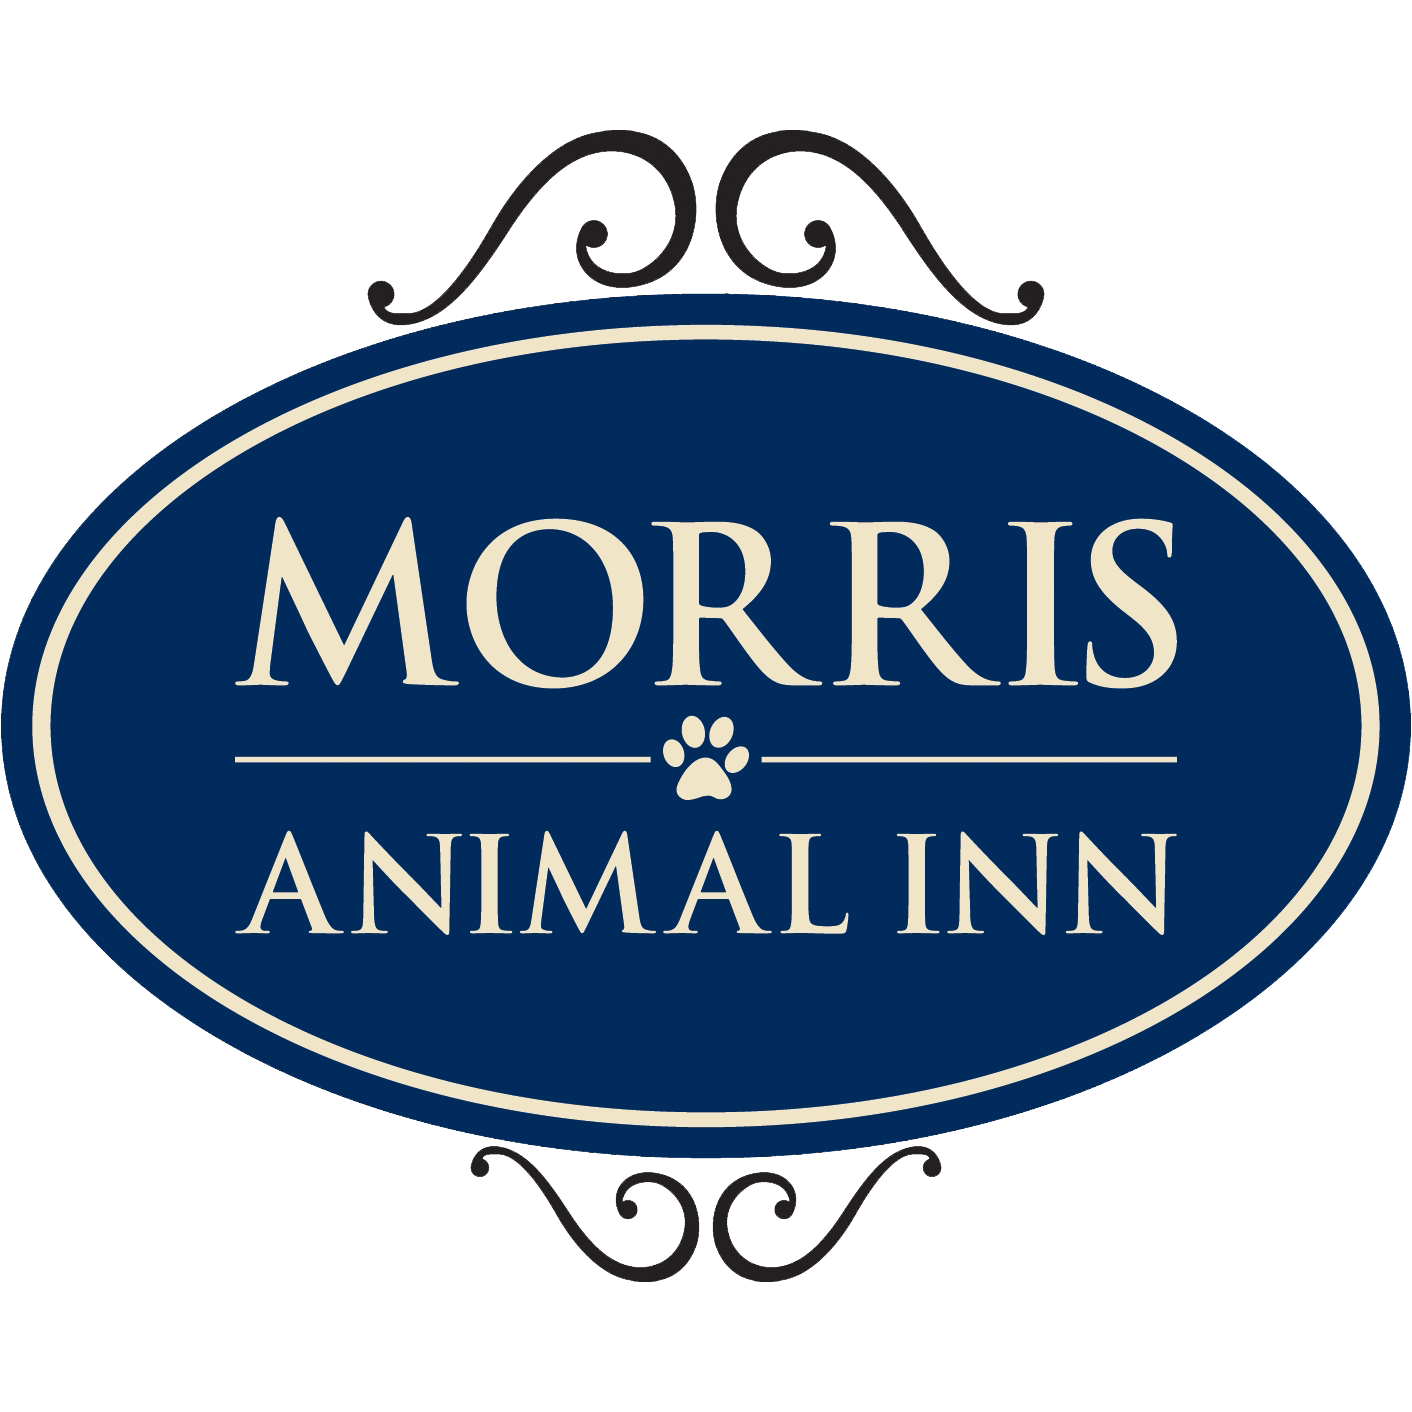 Morris Animal Inn - Morristown, NJ 07960 - (973)539-0377 | ShowMeLocal.com